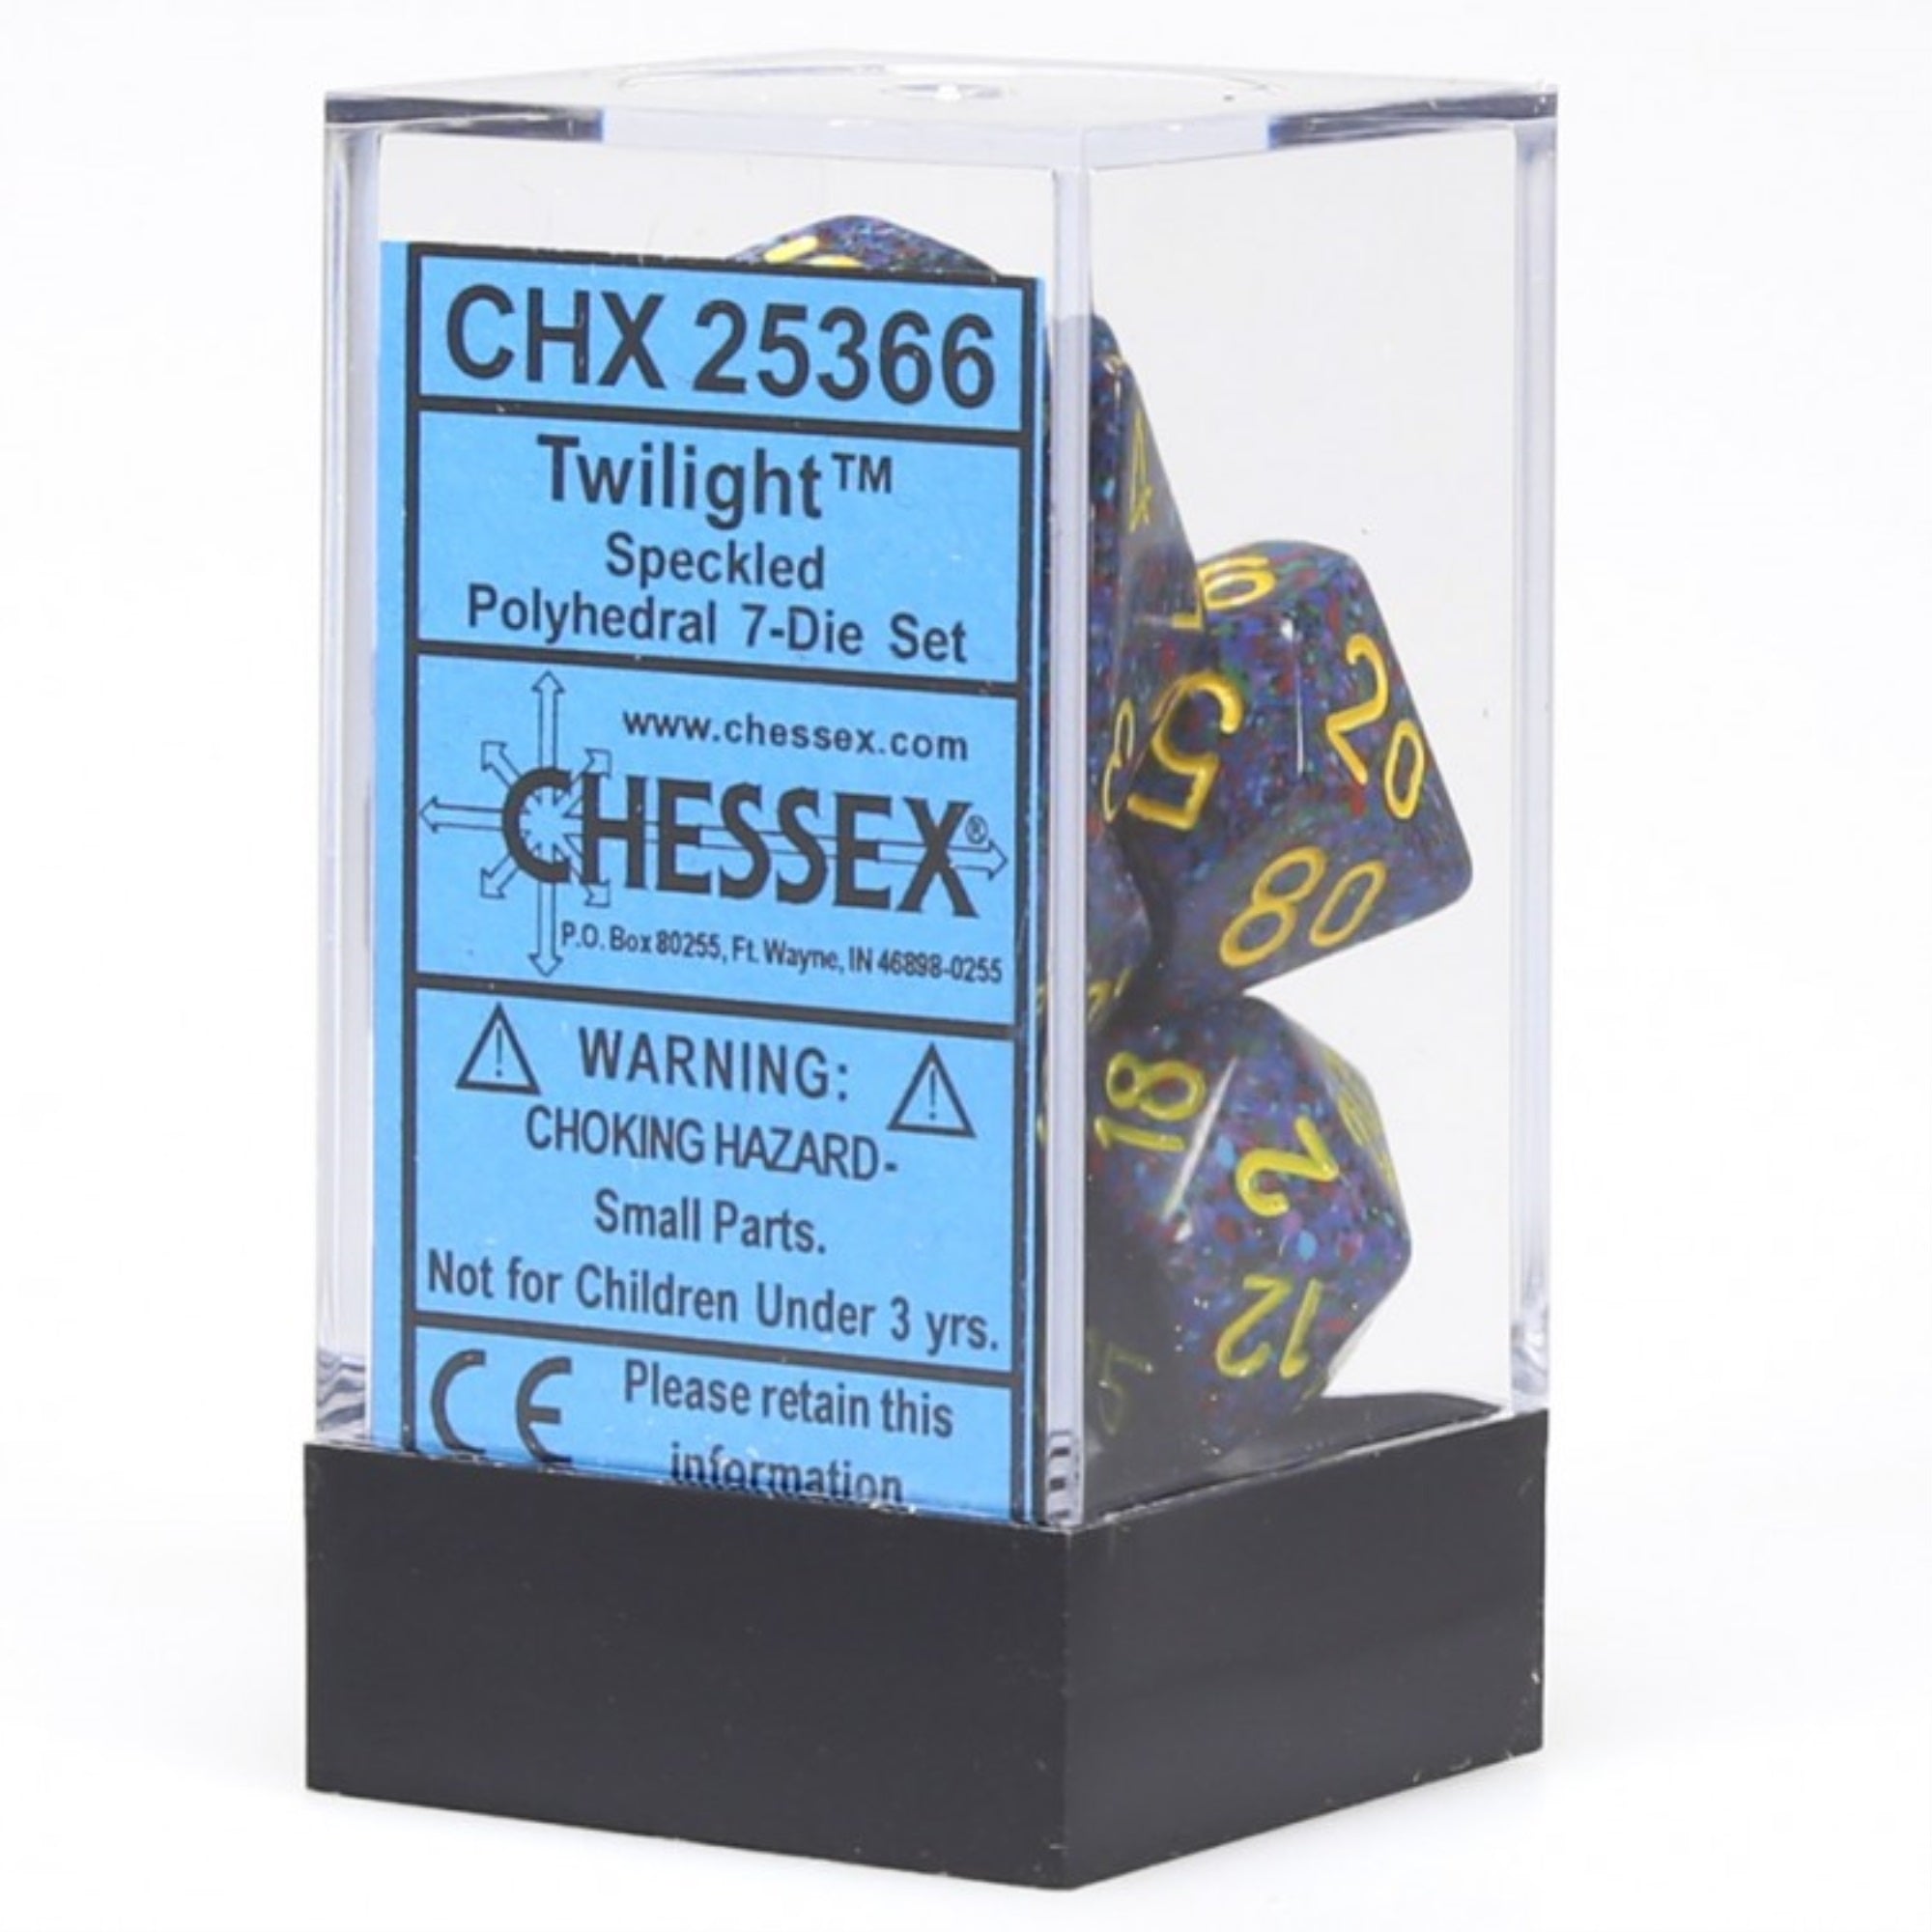 Chessex Speckled Polyhedral 7-Die Set